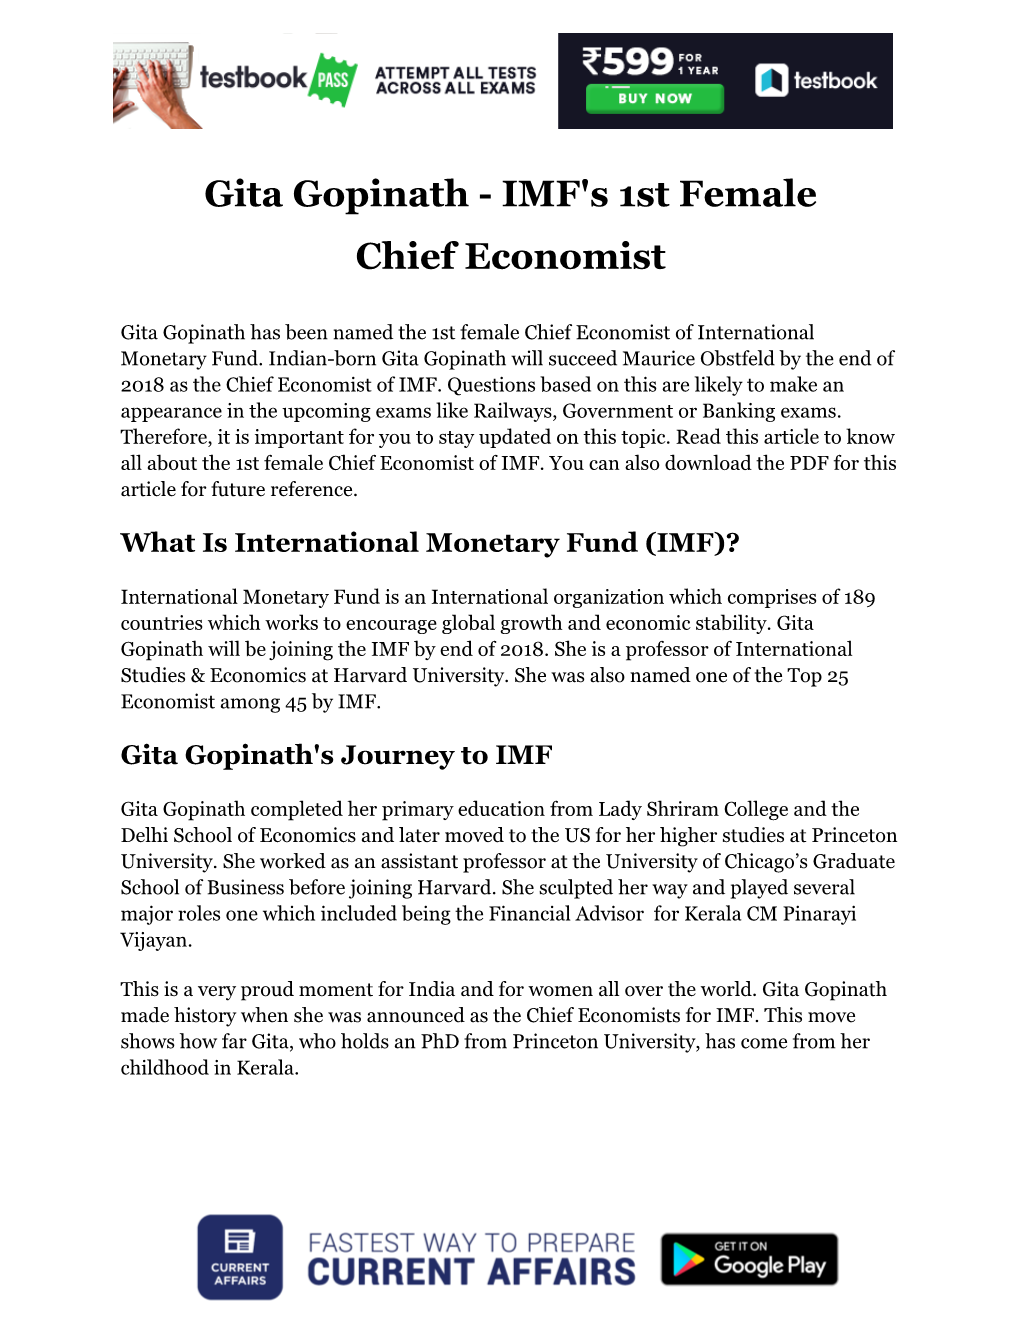 Gita Gopinath - IMF's 1St Female Chief Economist